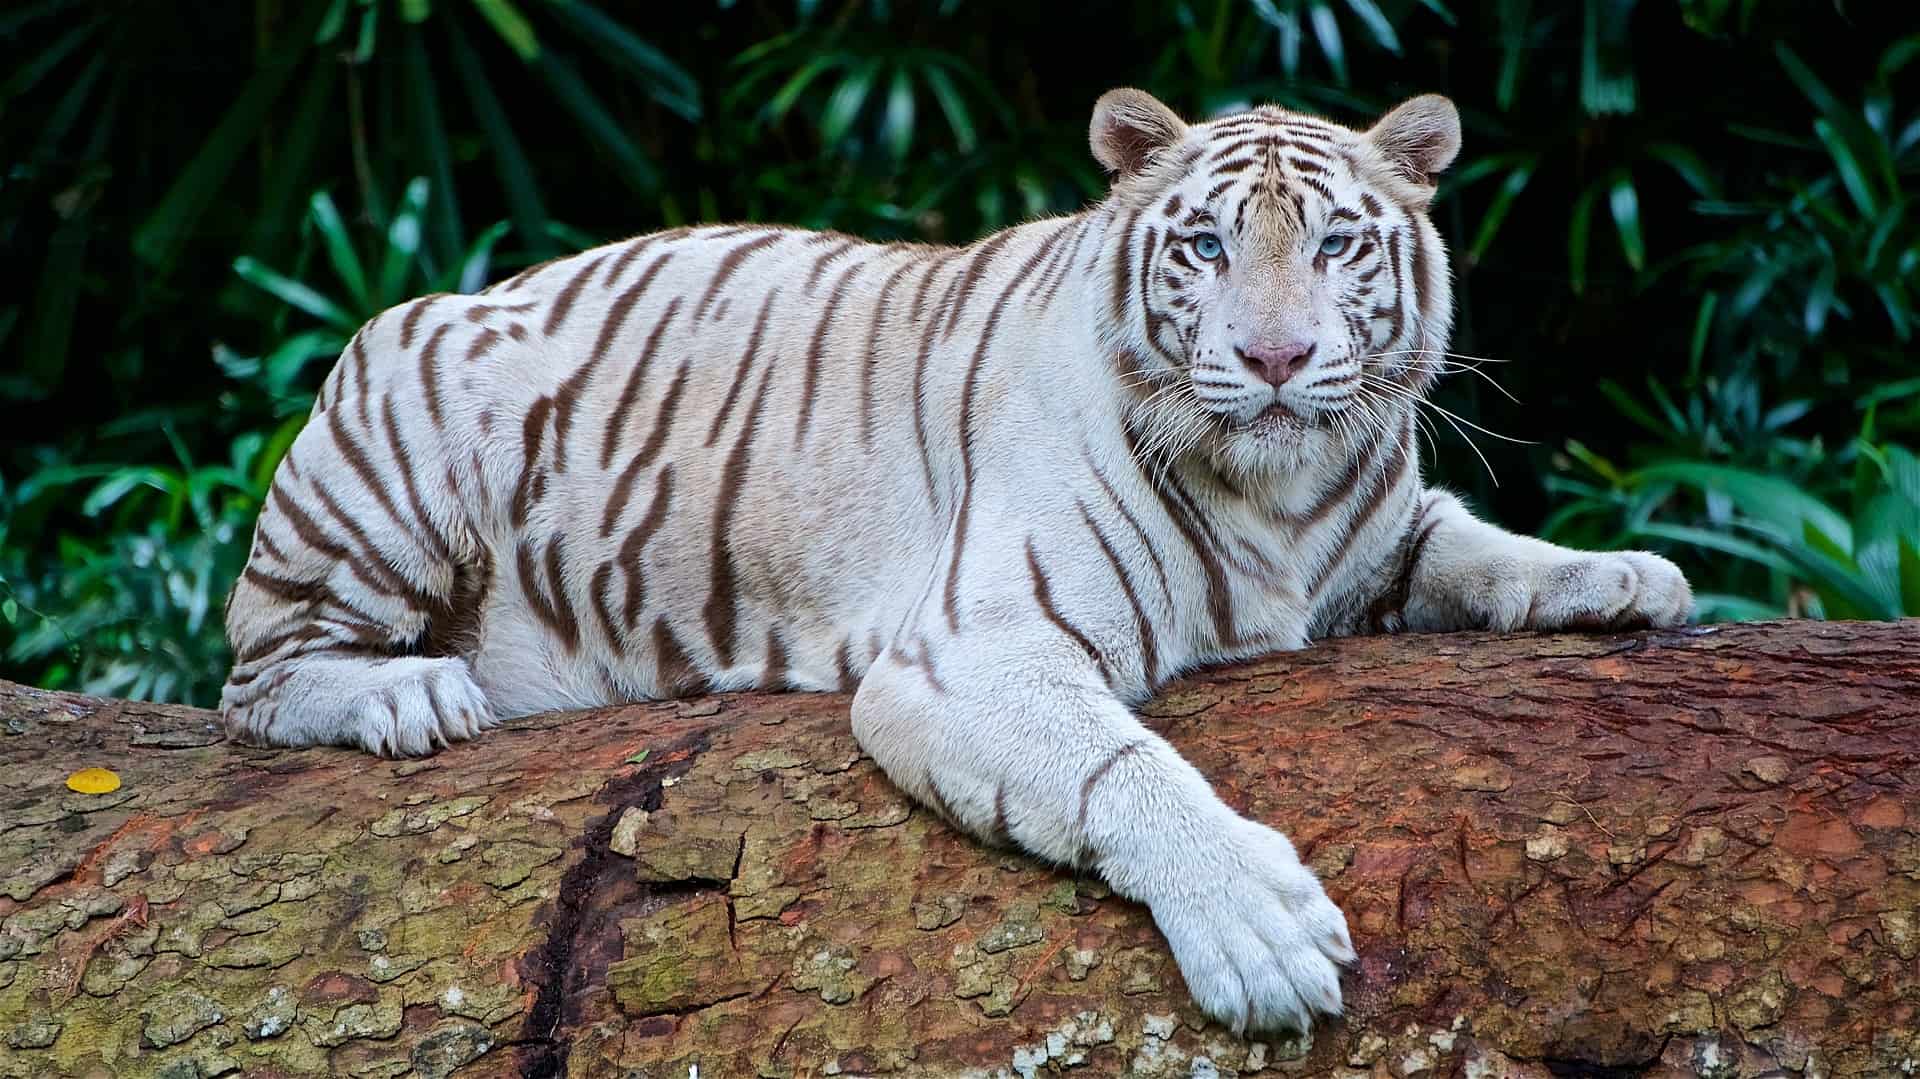 Top 16 White Tiger Facts - Diet, Habitat, Genetics & More | Facts.net